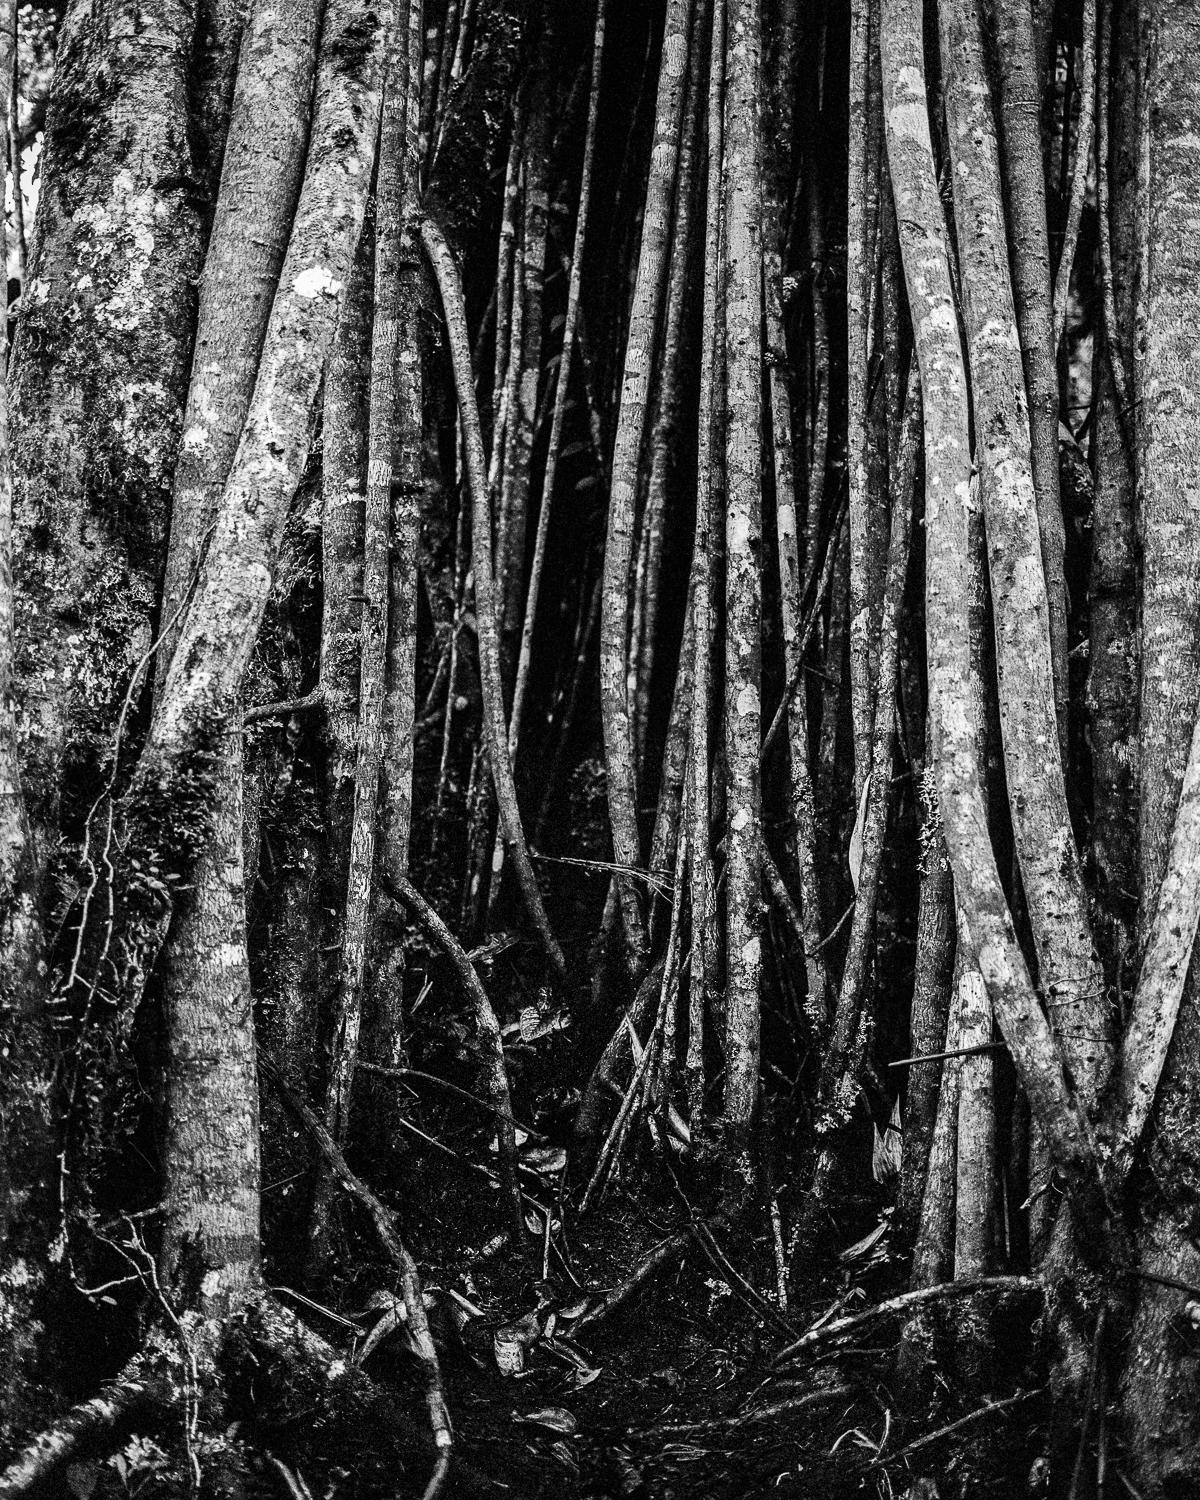 Black and White Photograph Miguel Winograd  - Races Selva Oscura, imprimé gélatino-argentique